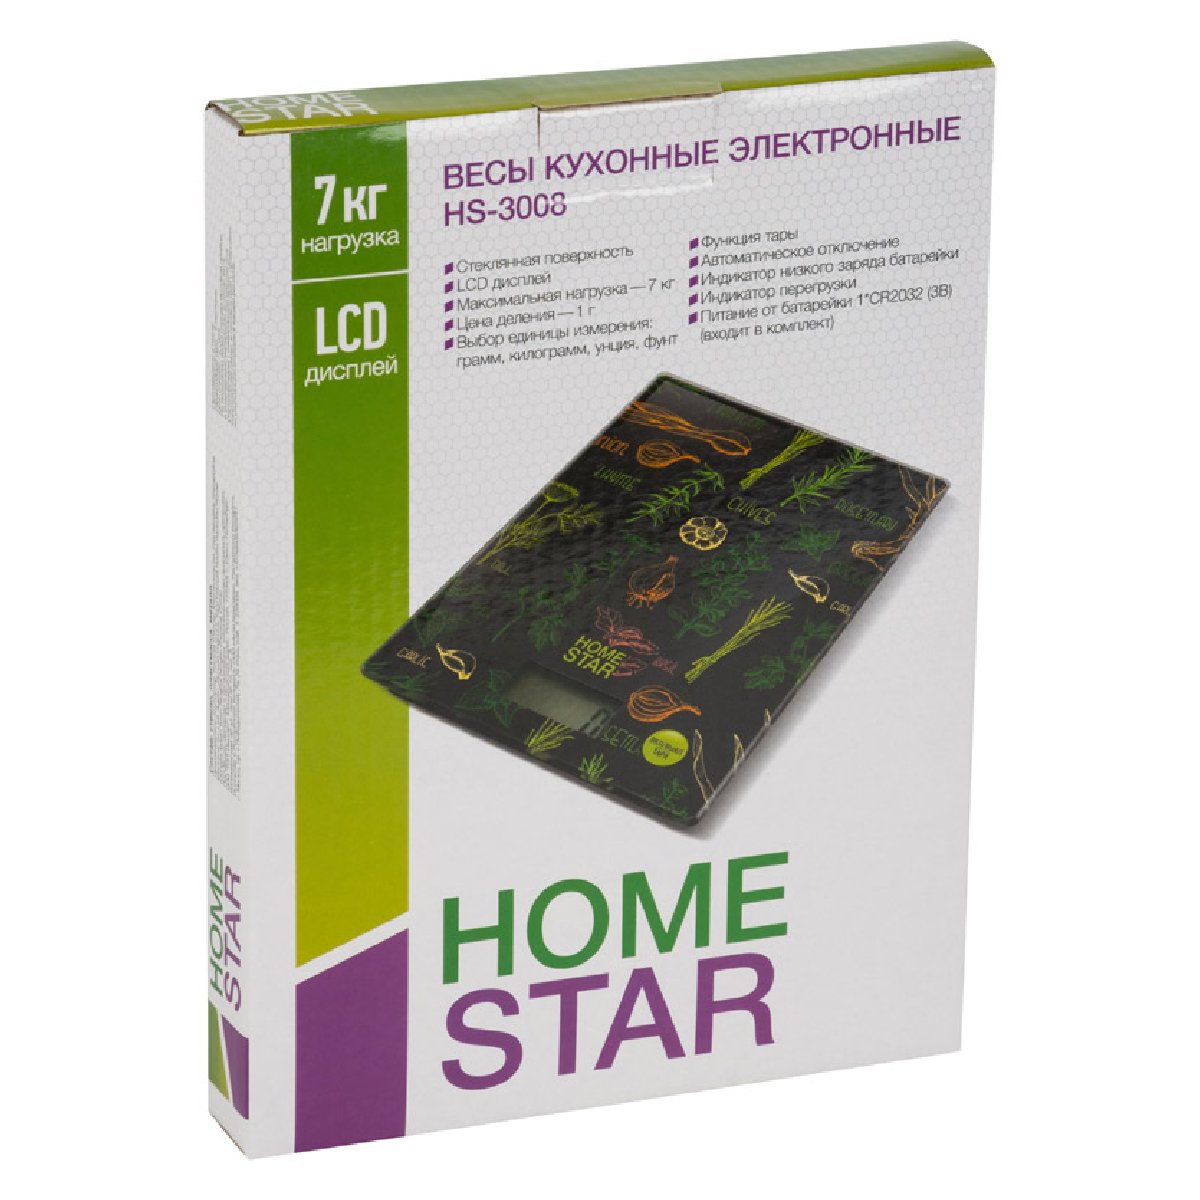 Homestar HS-3008 Электронные кухонные весы 7кг 1г (специи)